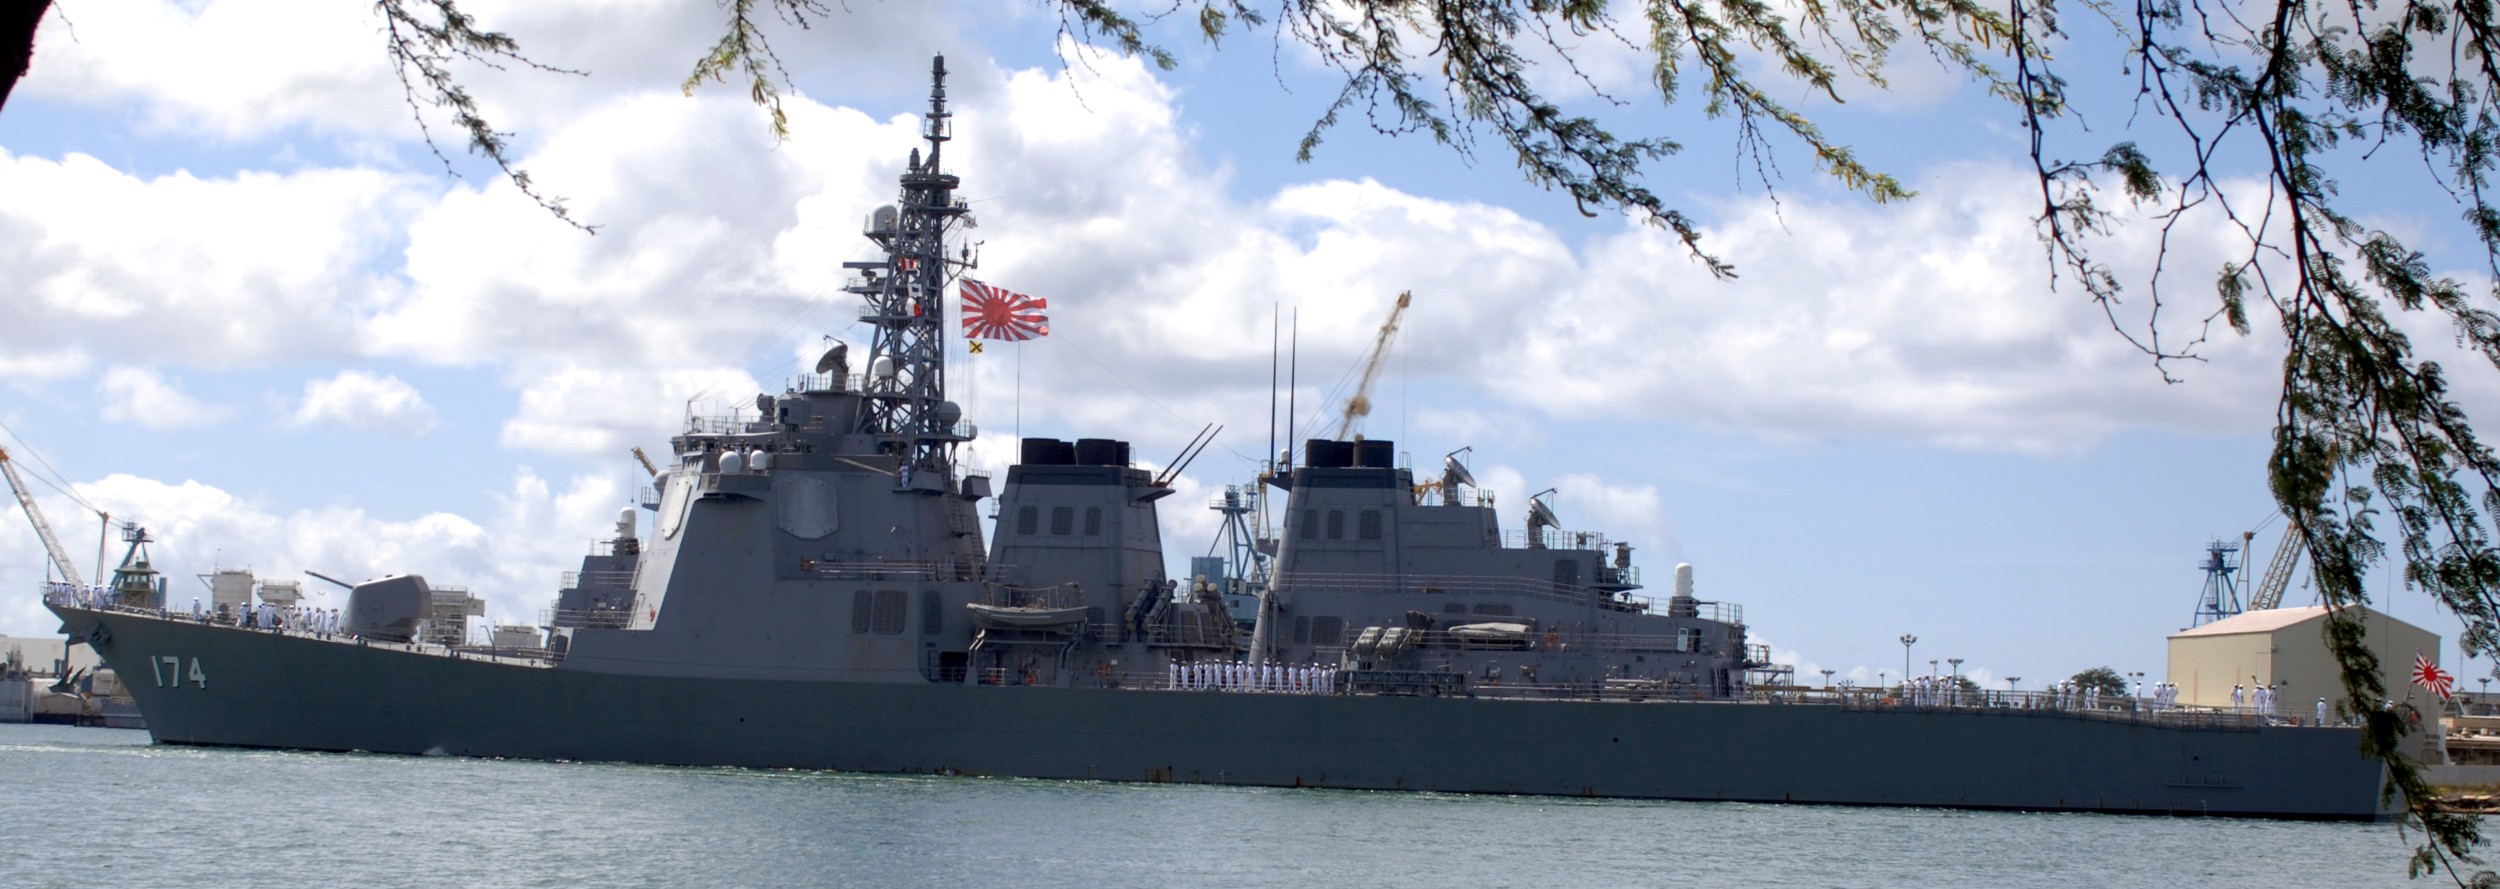 ddg-174 jds kirishima kongou class destroyer japan maritime self defense force jmsdf 28